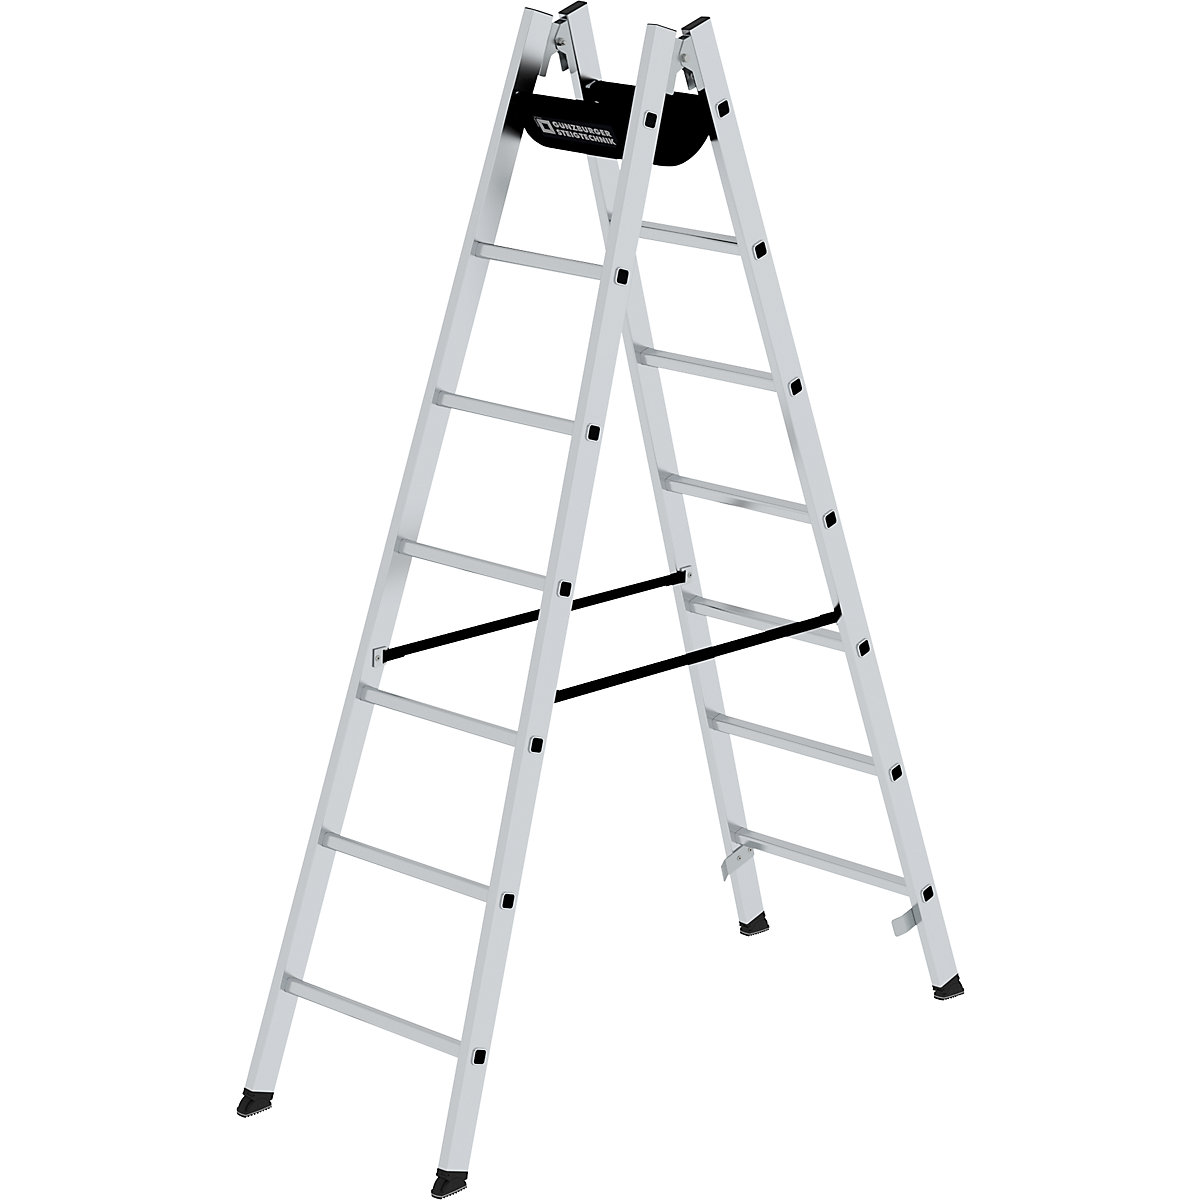 Safety rung ladder, double sided access – MUNK, rungs 30 x 30 mm, non-slip, 2x7 rungs-7